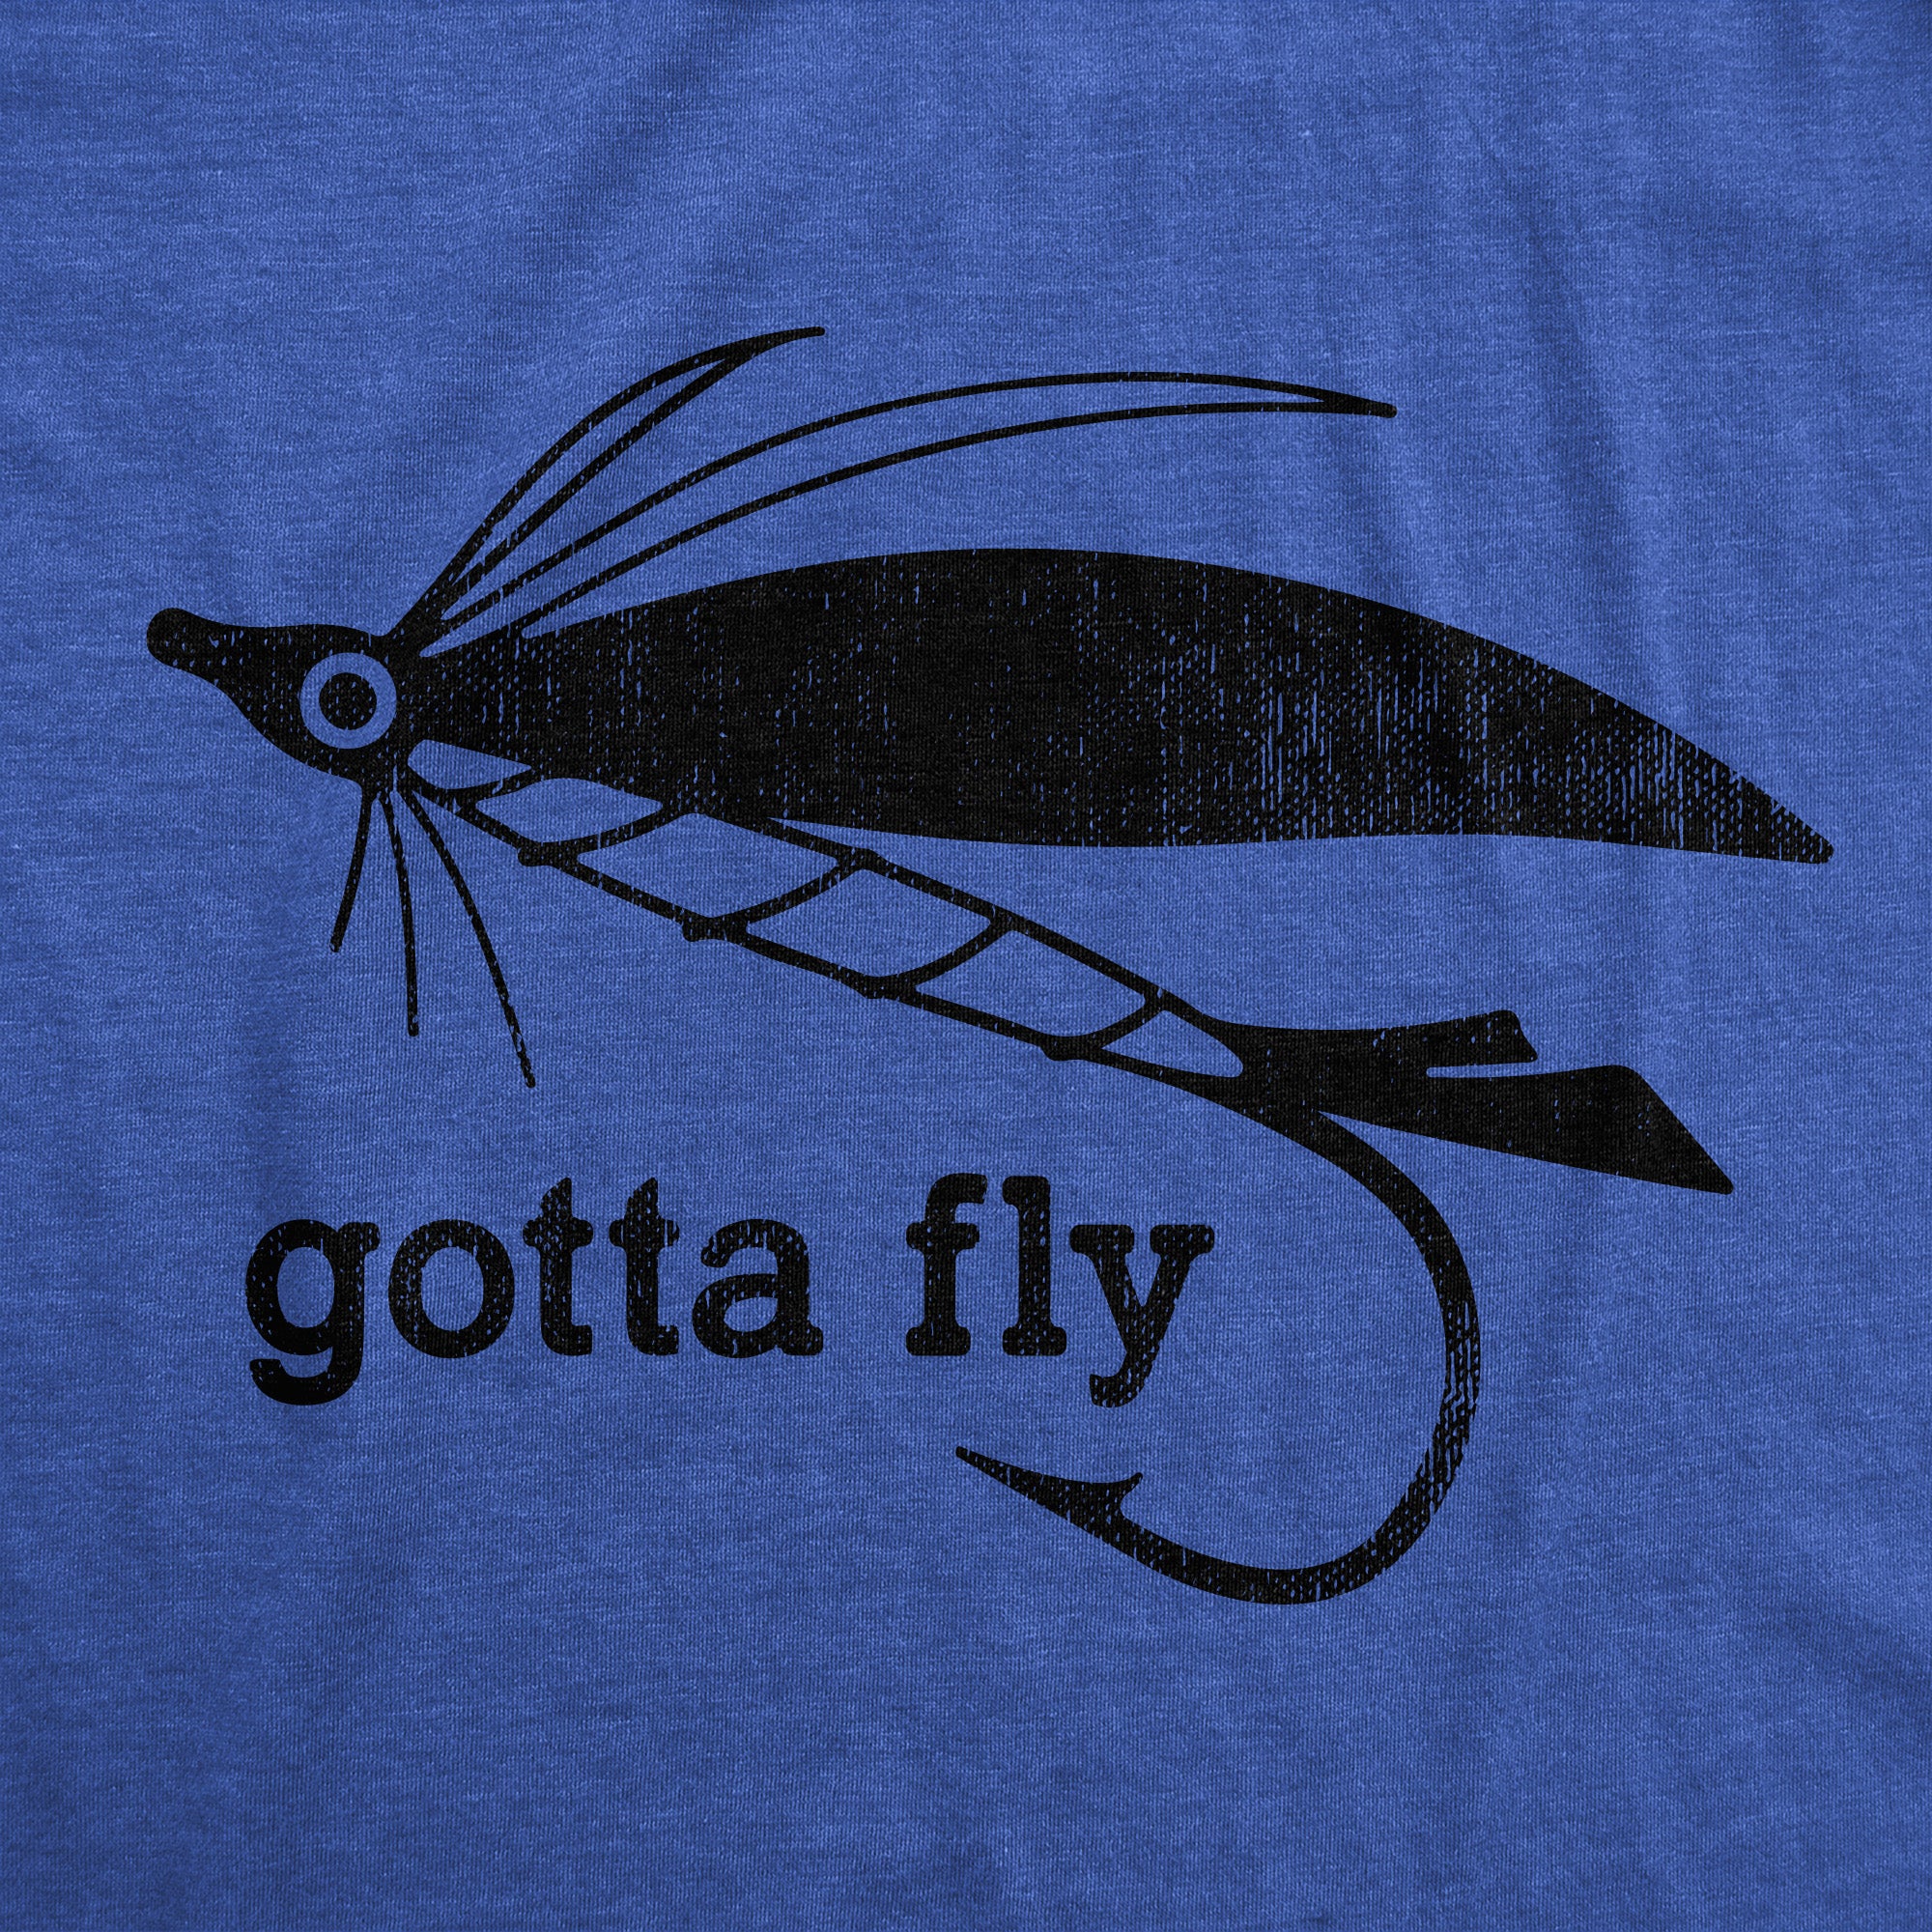 Funny Heather Royal - Gotta Fly Gotta Fly Mens T Shirt Nerdy Fishing Sarcastic Tee